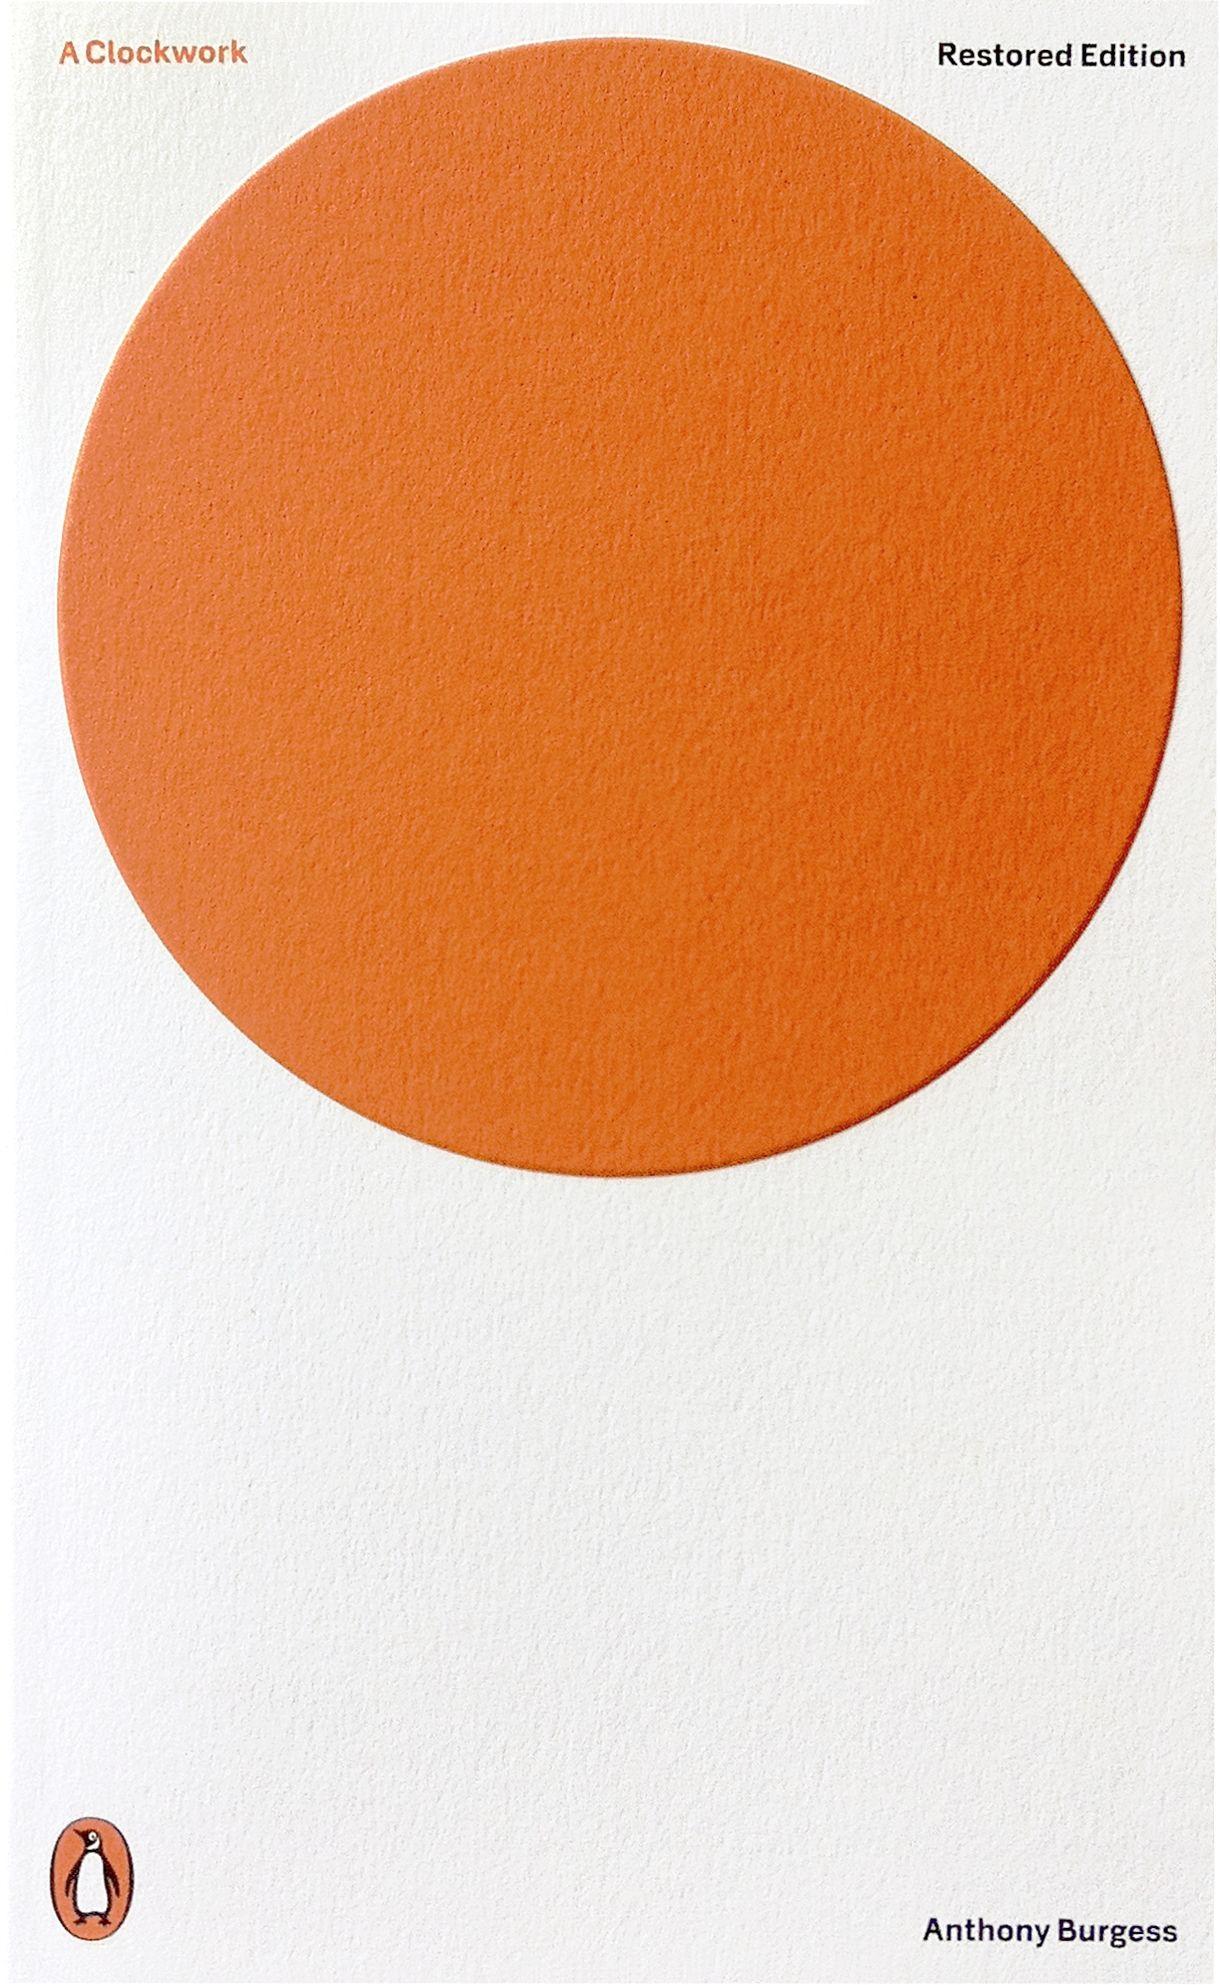 Penguin in Orange Oval Logo - A Clockwork Orange